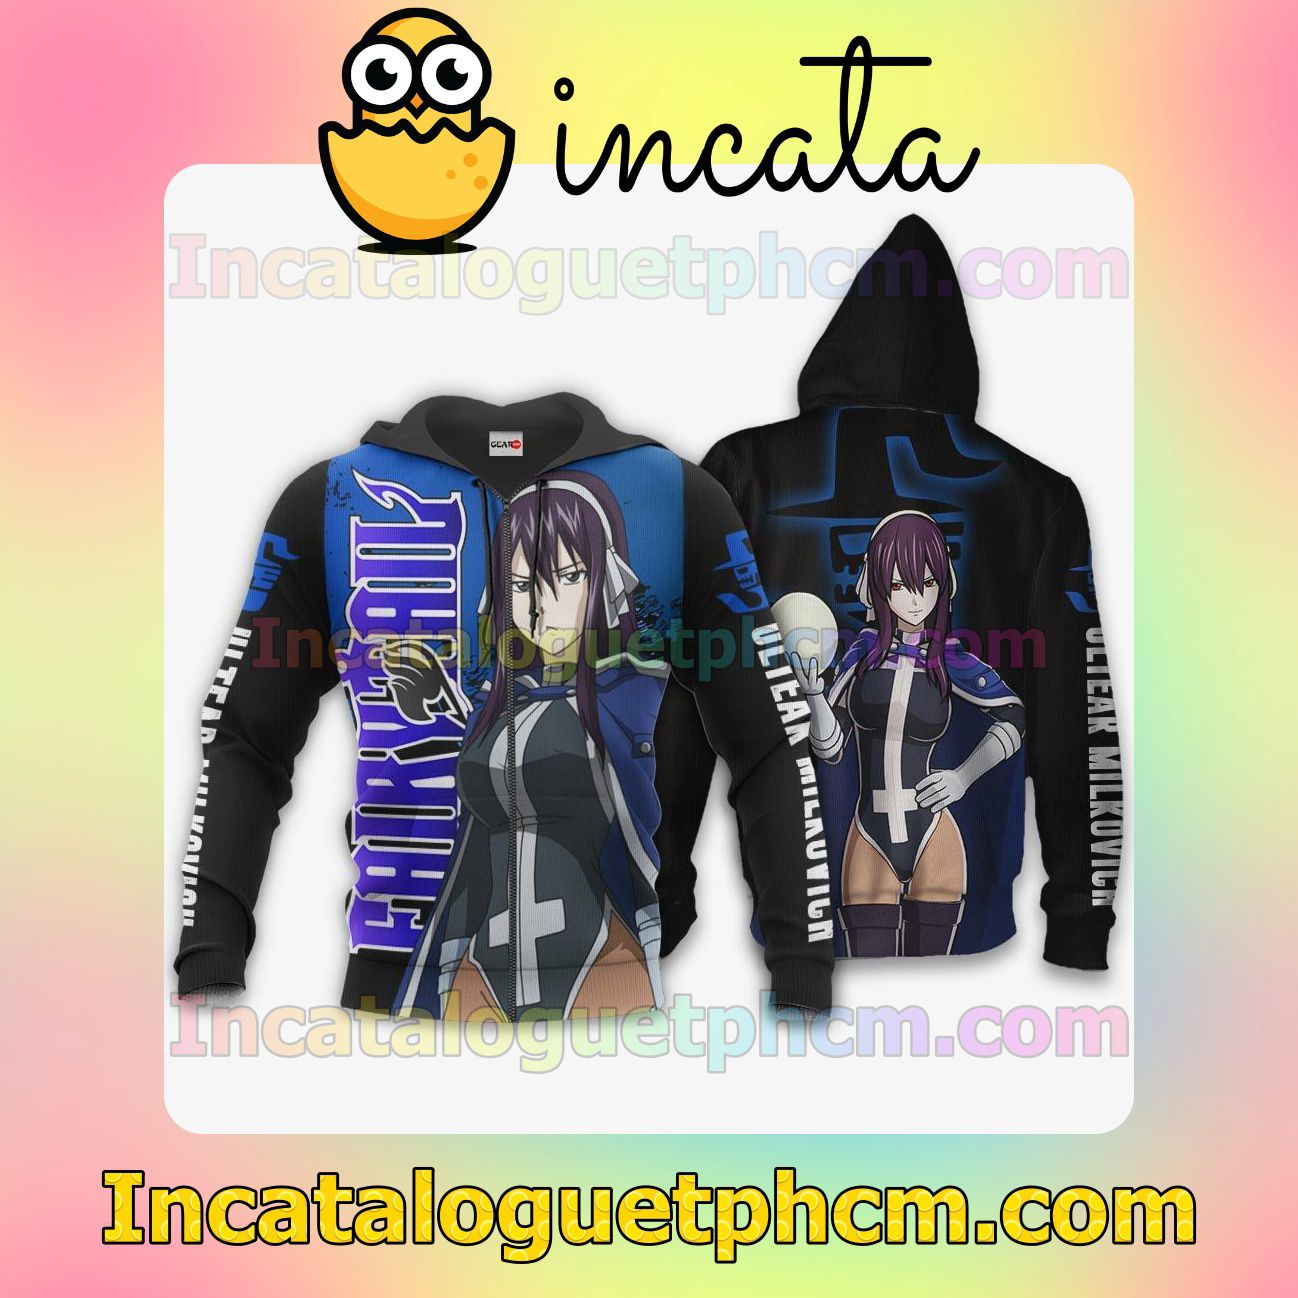 Ultear Milkovich Fairy Tail Anime Clothing Merch Zip Hoodie Jacket Shirts